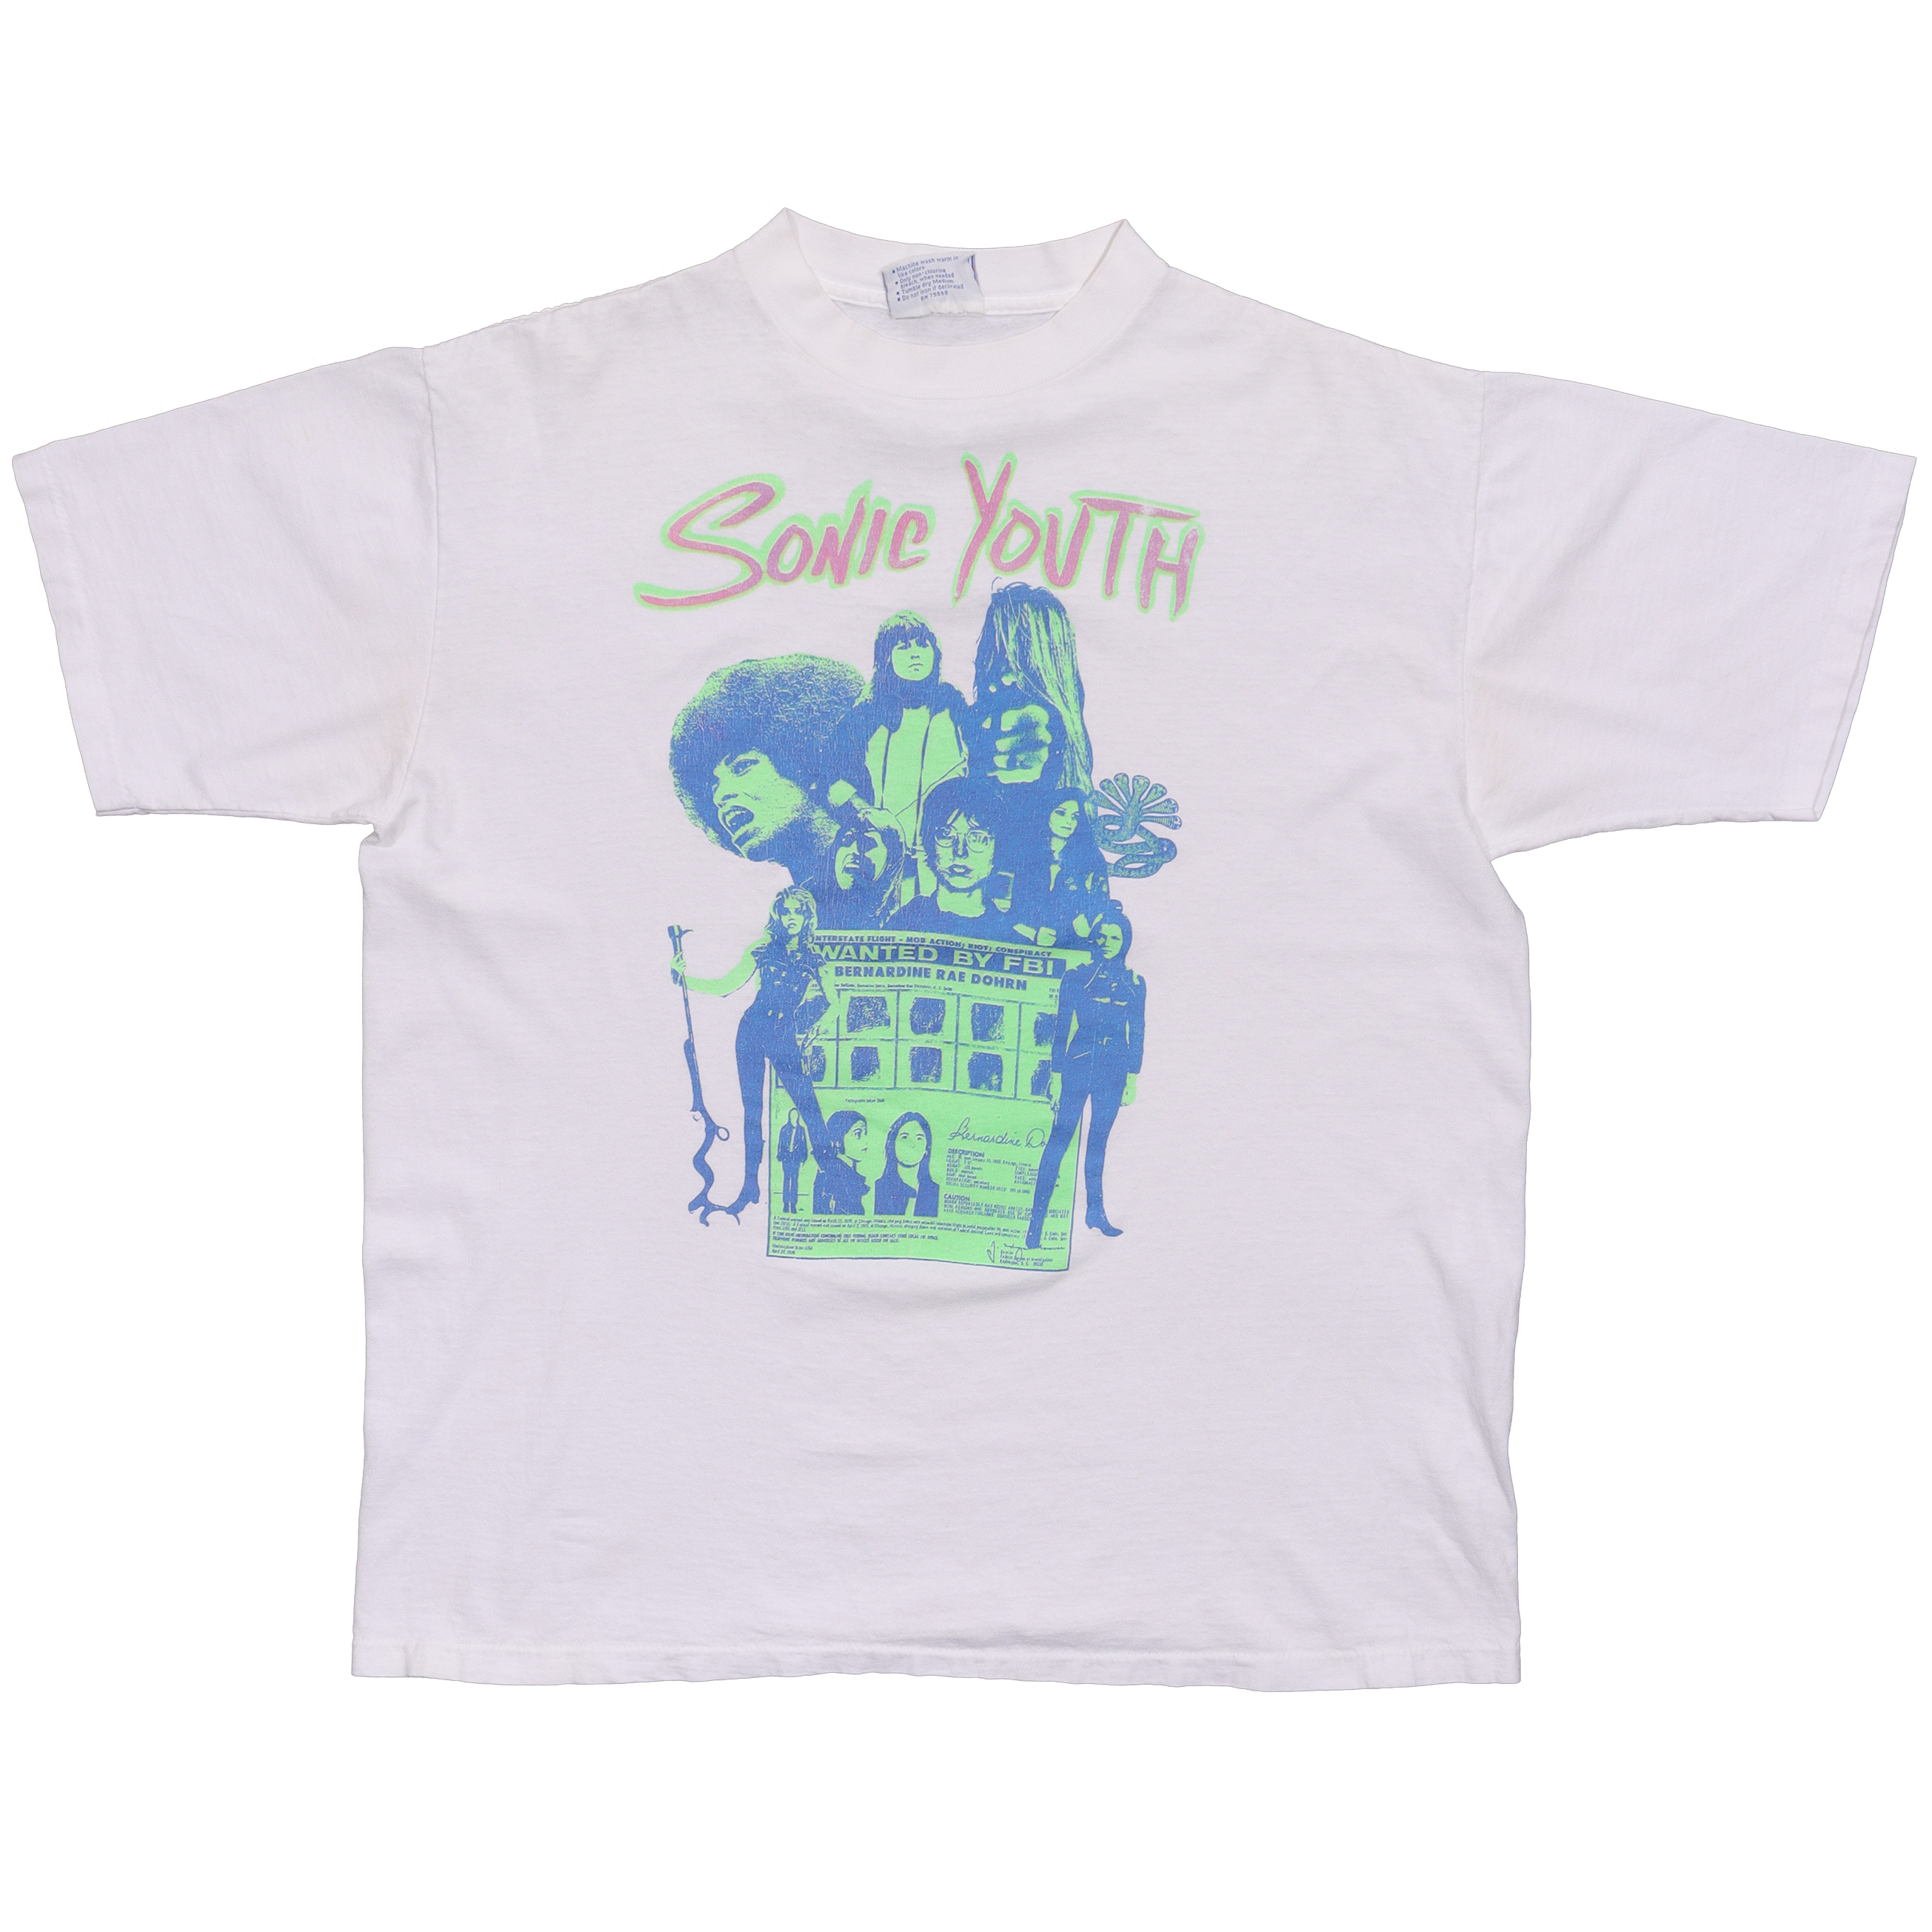 Sonic Youth "KOOL THING" T-Shirt